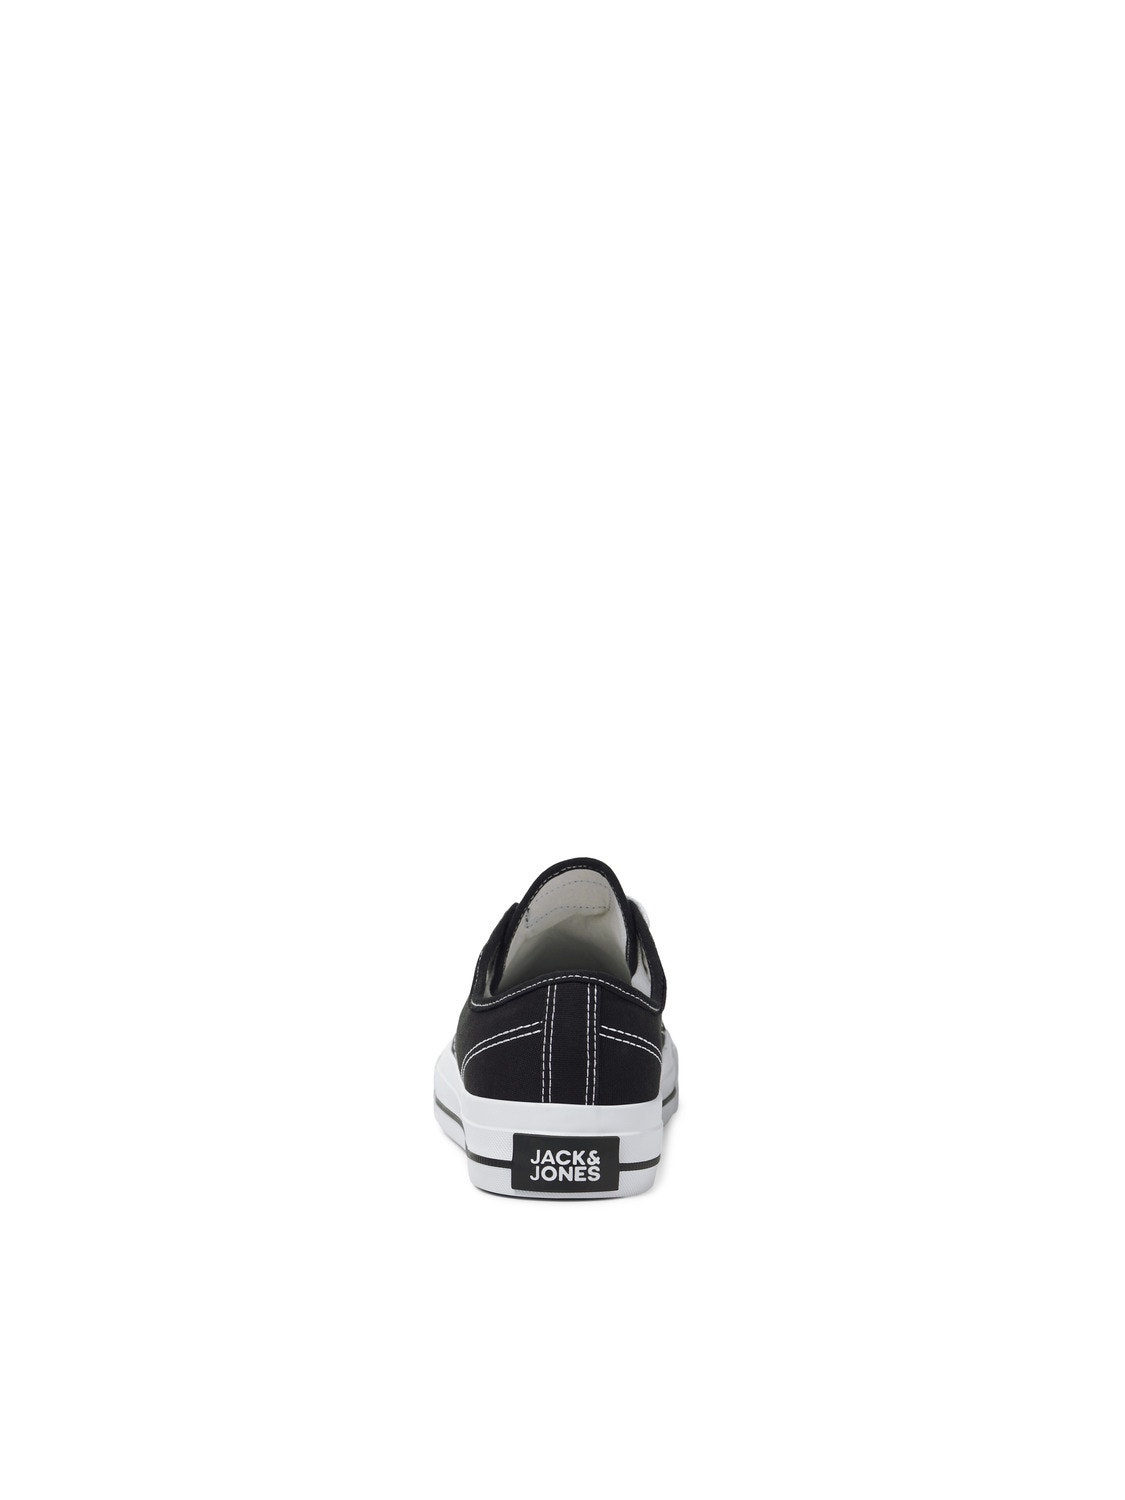 Jack & Jones Canvas Sneakers -Anthracite - 12203651